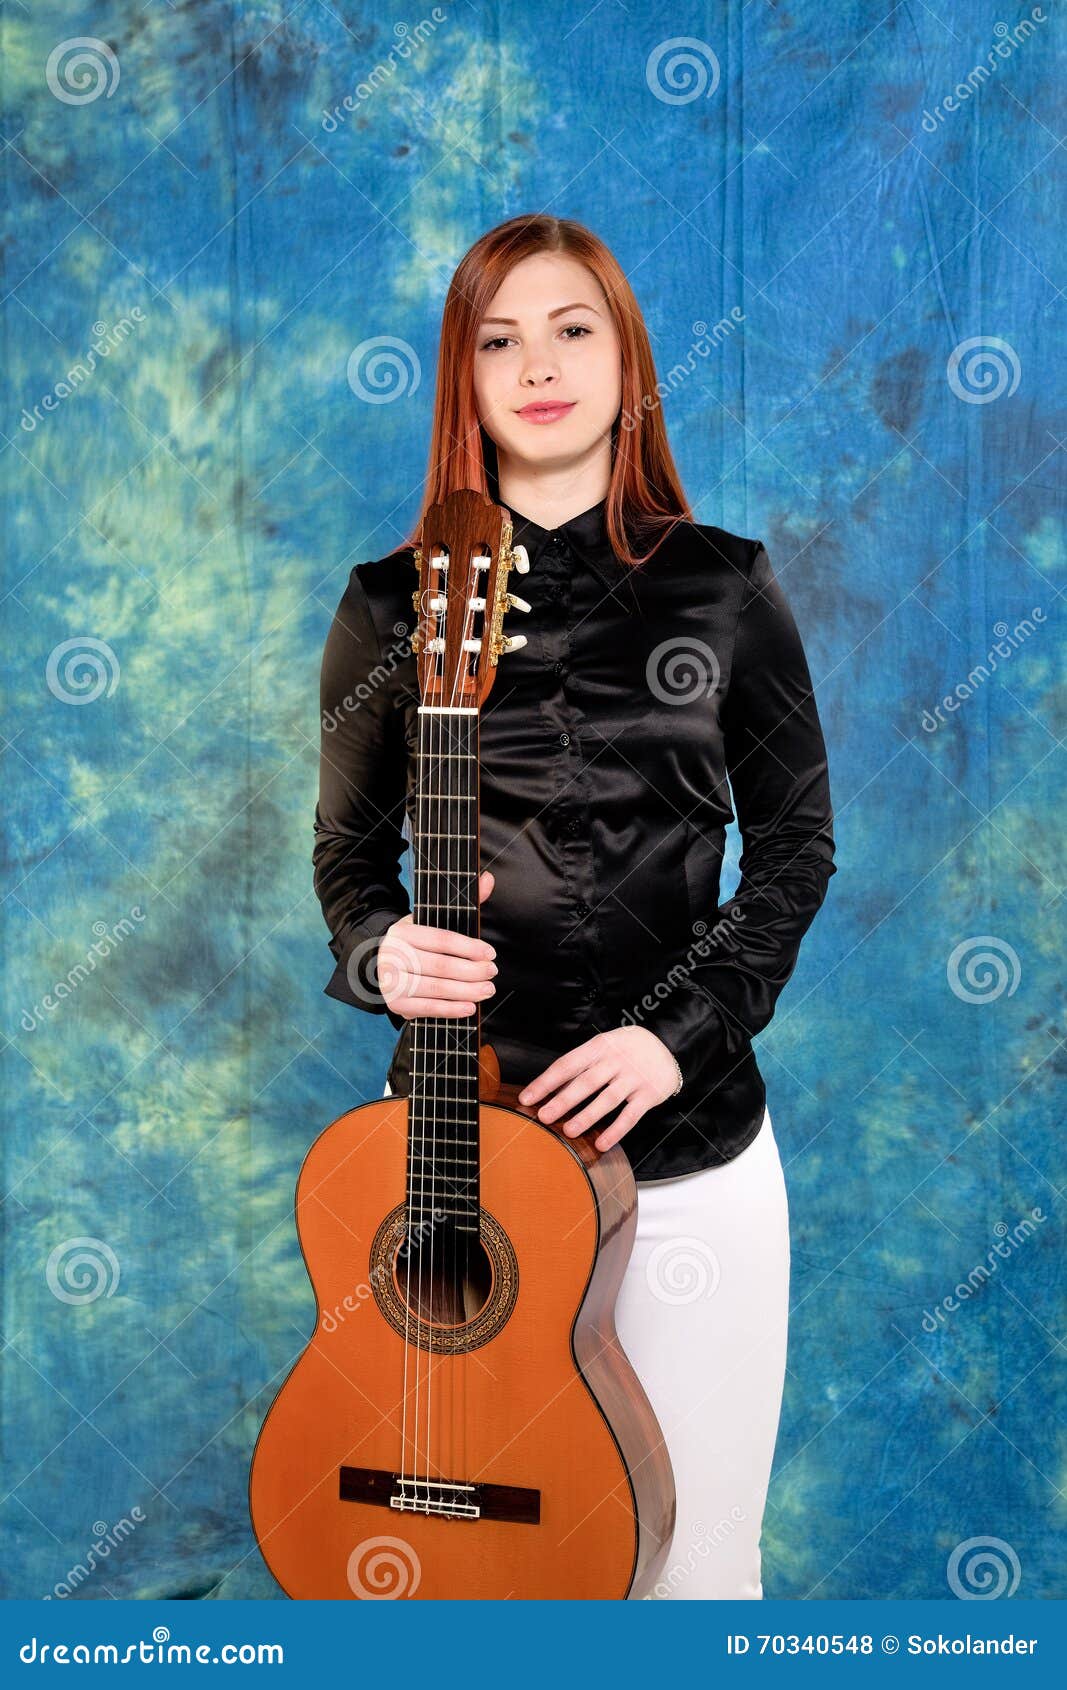 30 Cool Poses With Guitar A Lady Should Know - Feminine Buzz | Konser,  Fotografi, Sejarah seni